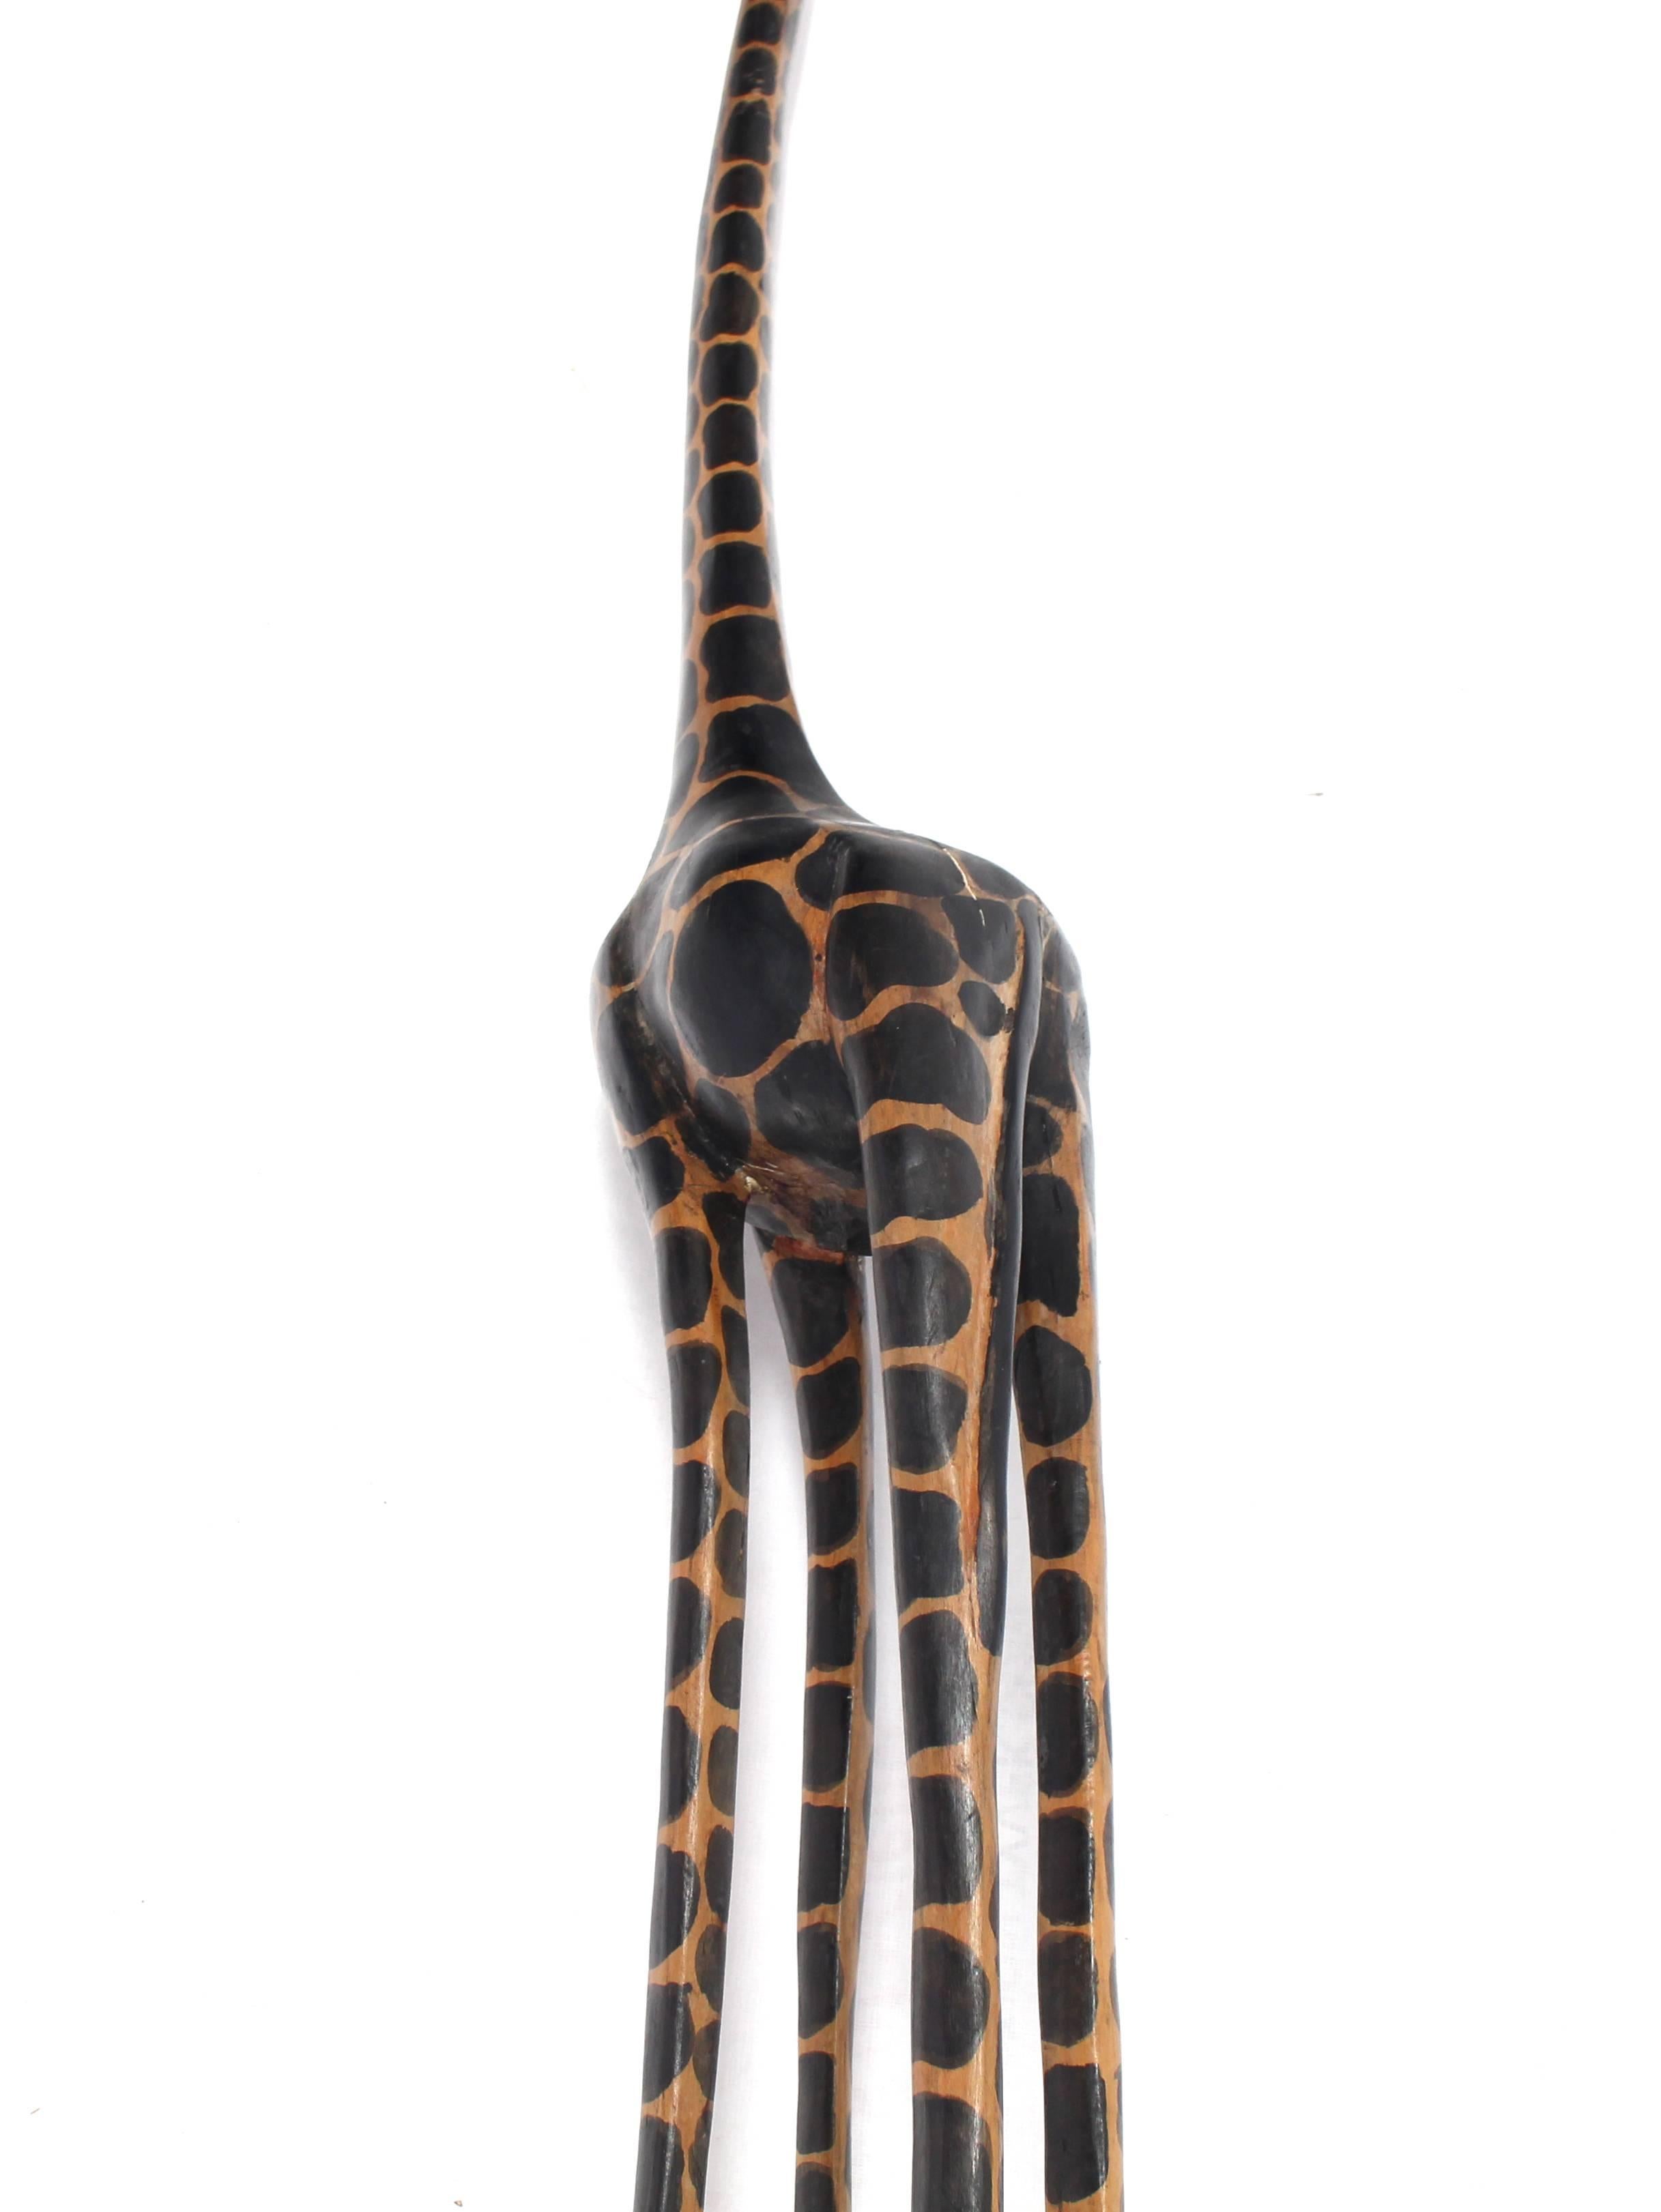 Mid-Century Modern 10' Tall Carved Sculpture of a Giraffe on Long Legs.